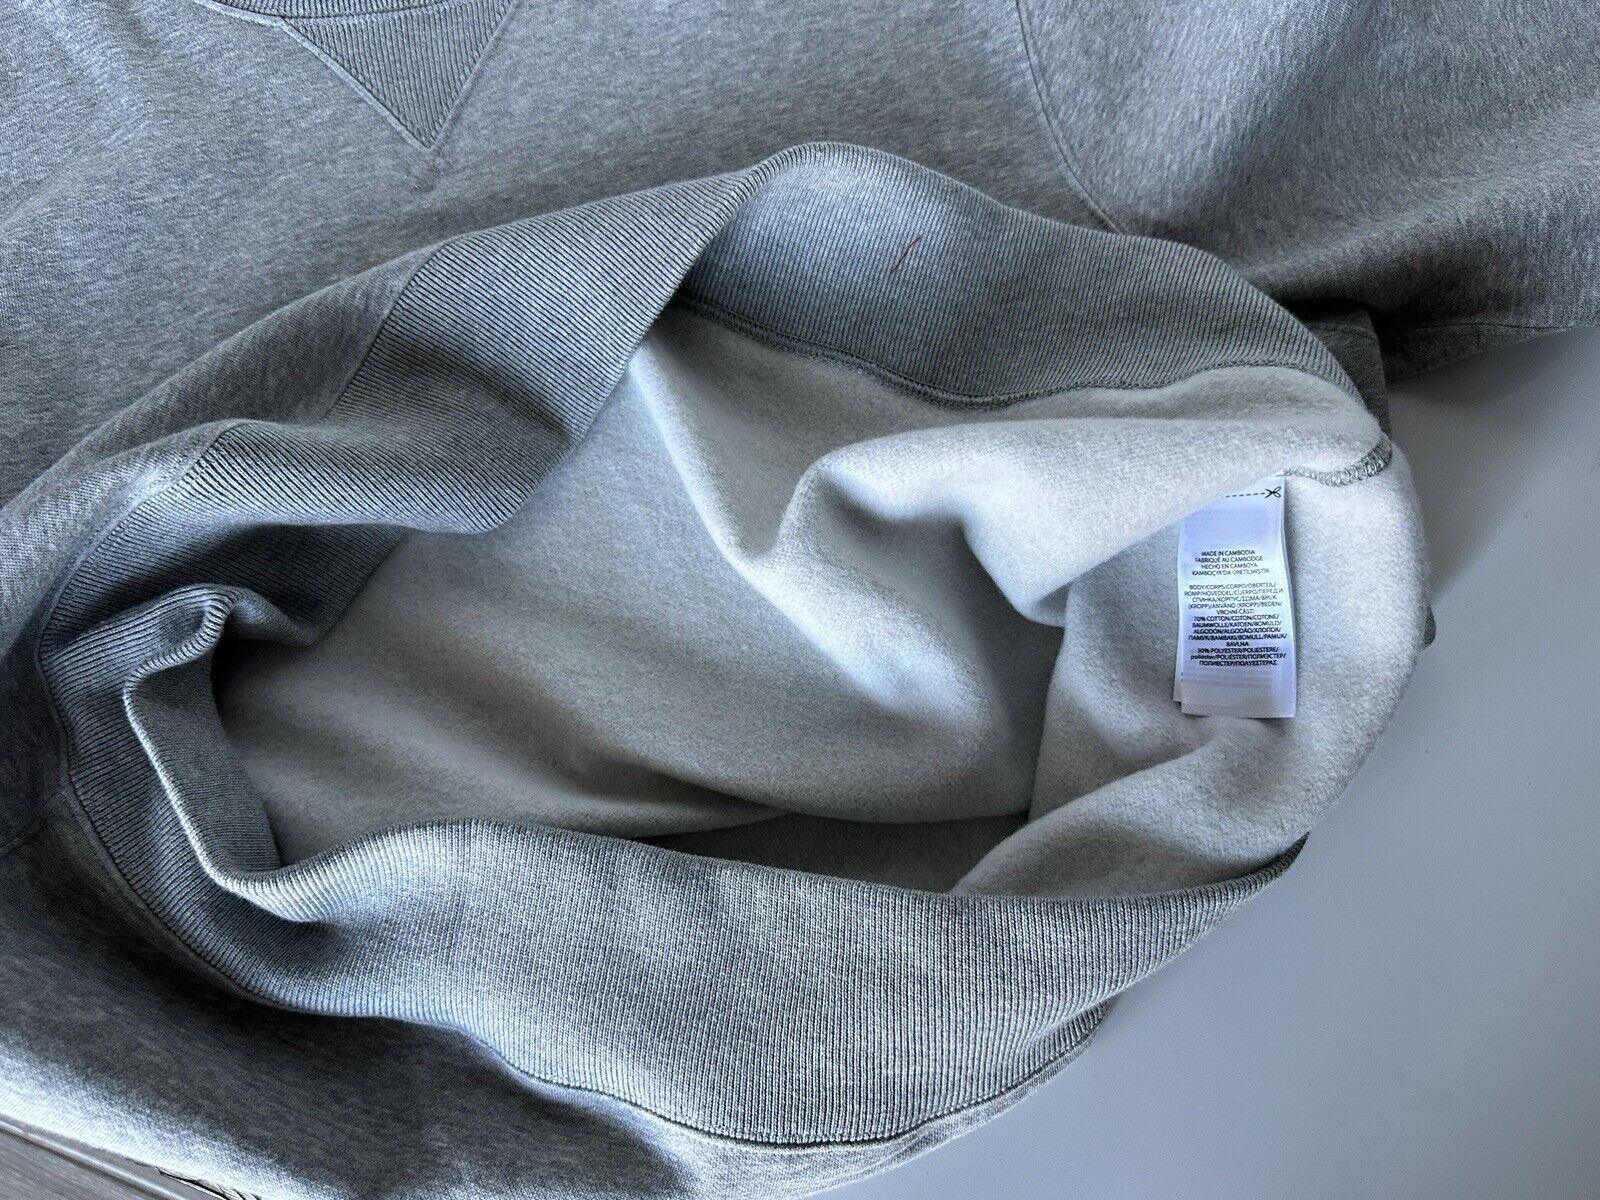 Neu 148 $ Polo Ralph Lauren Bear Sweatshirt Grau 2XL/2TG 